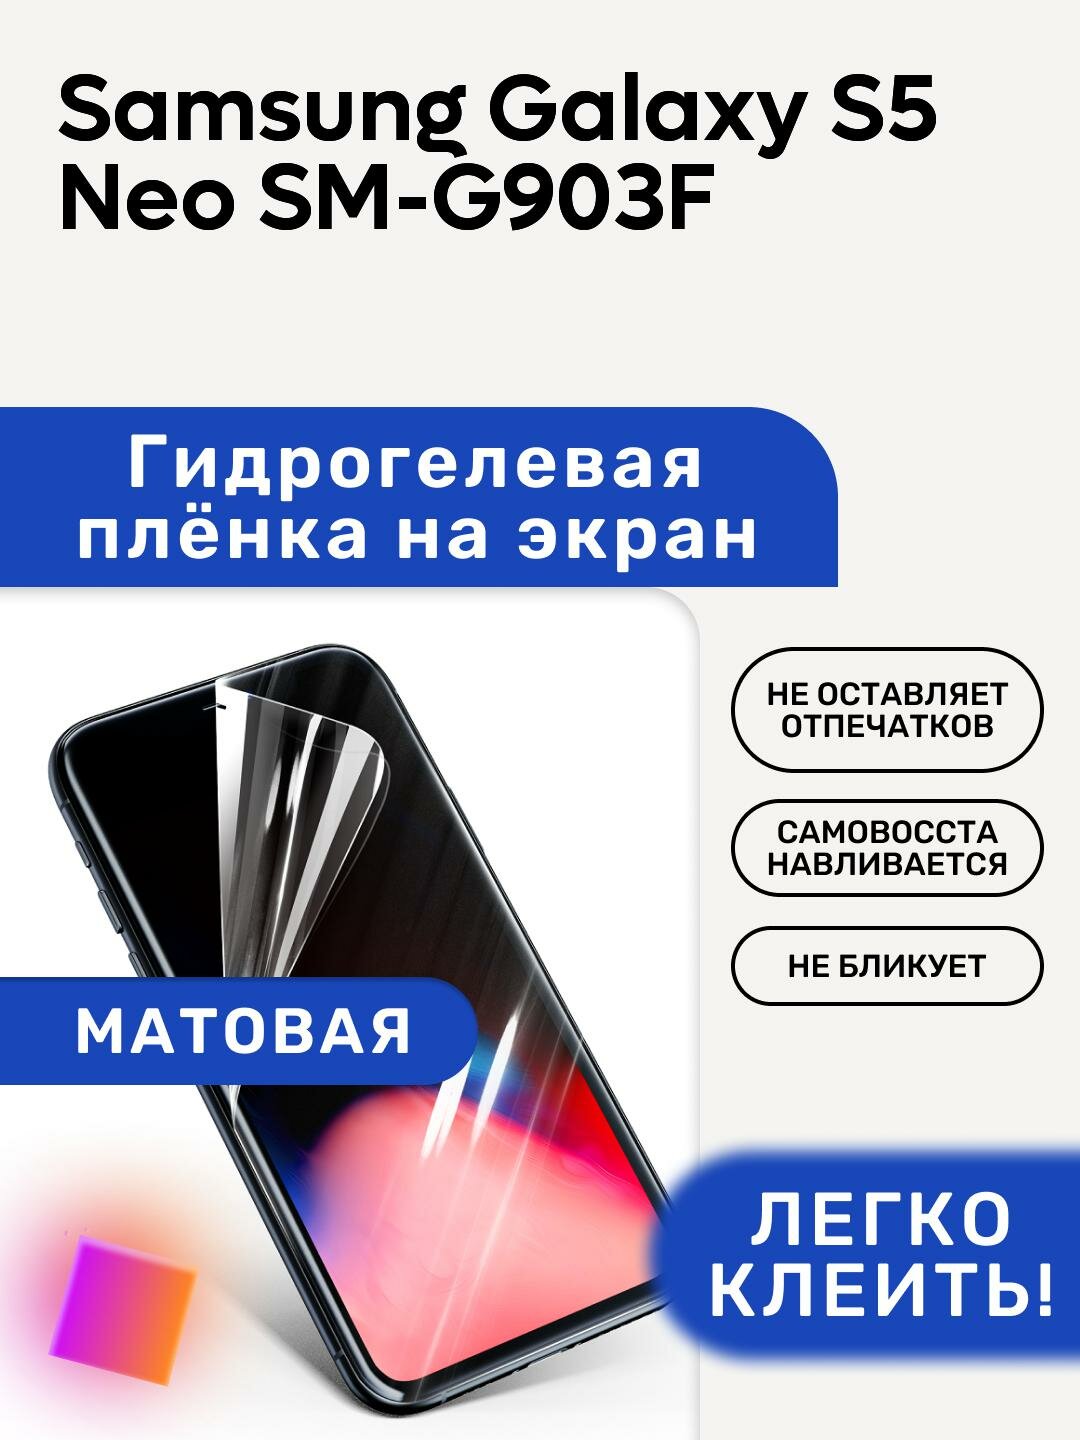 Матовая Гидрогелевая плёнка, полиуретановая, защита экрана Samsung Galaxy S5 Neo SM-G903F